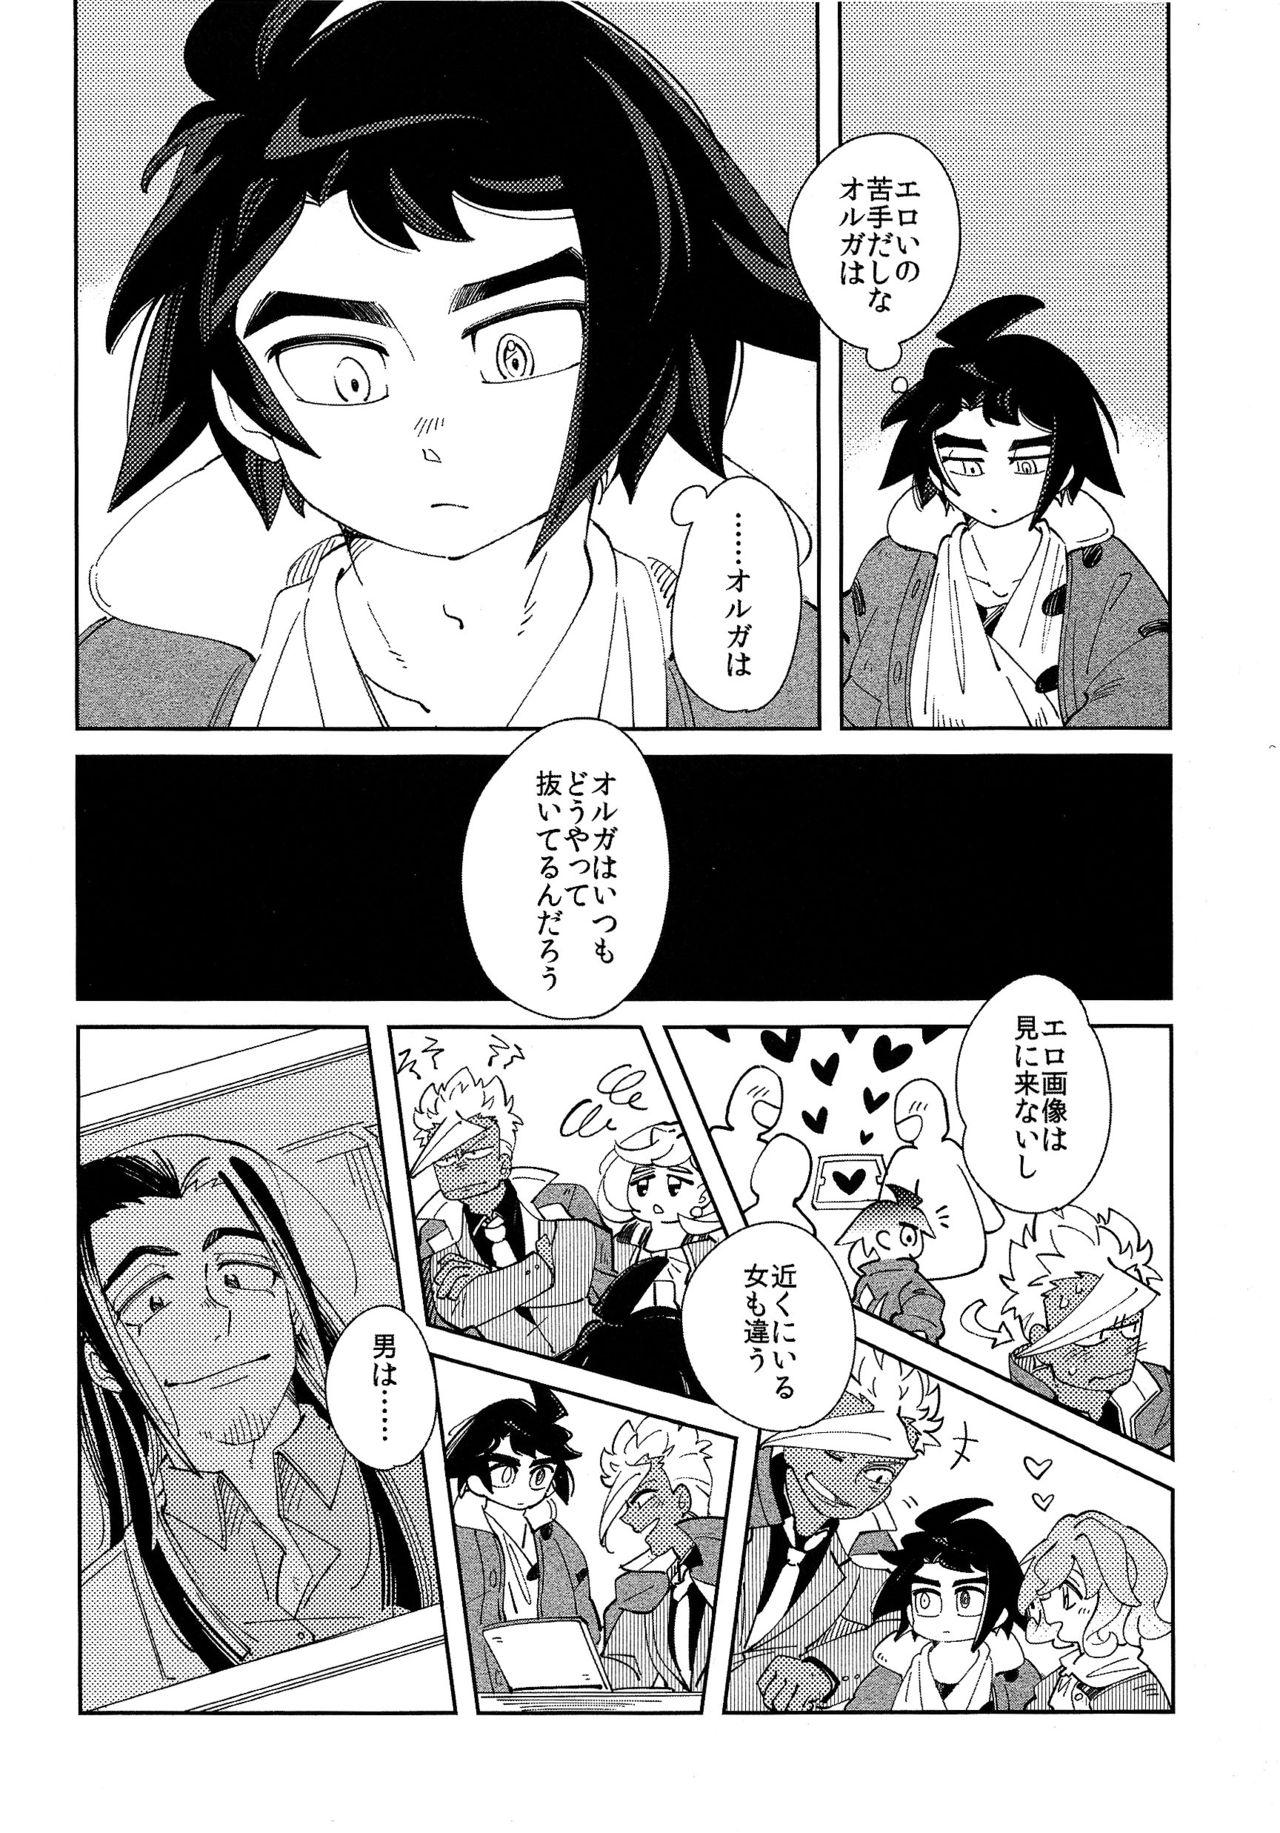 Balls Moufu no Nakami wa? - Mobile suit gundam tekketsu no orphans Kitchen - Page 5